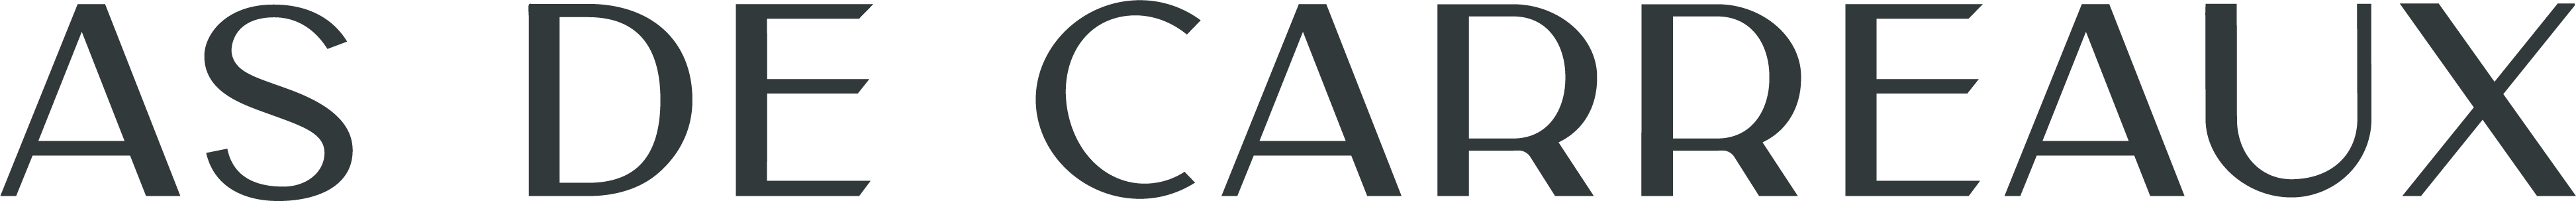 logo_As de carreaux